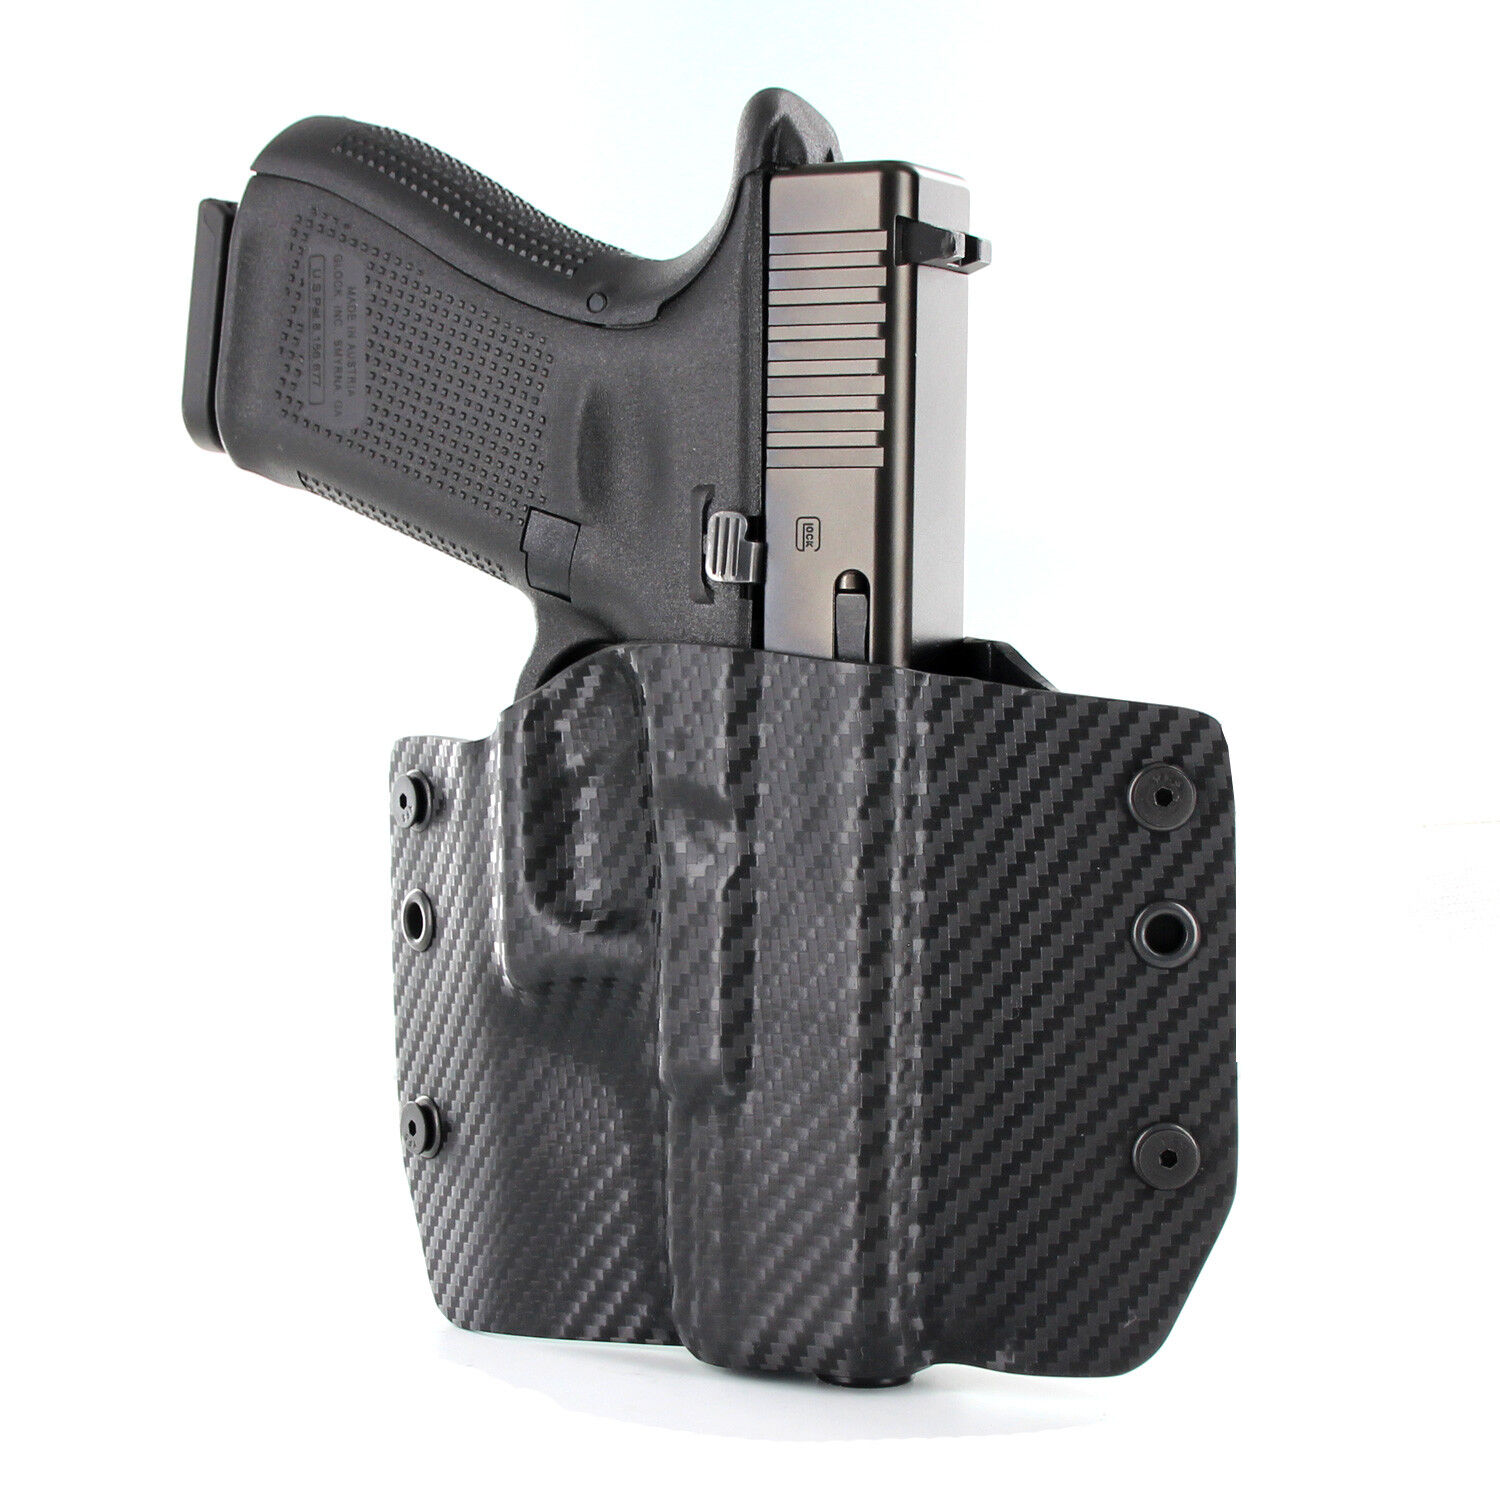 OWB Kydex Holster for Glock Handguns - Black Carbon Fiber